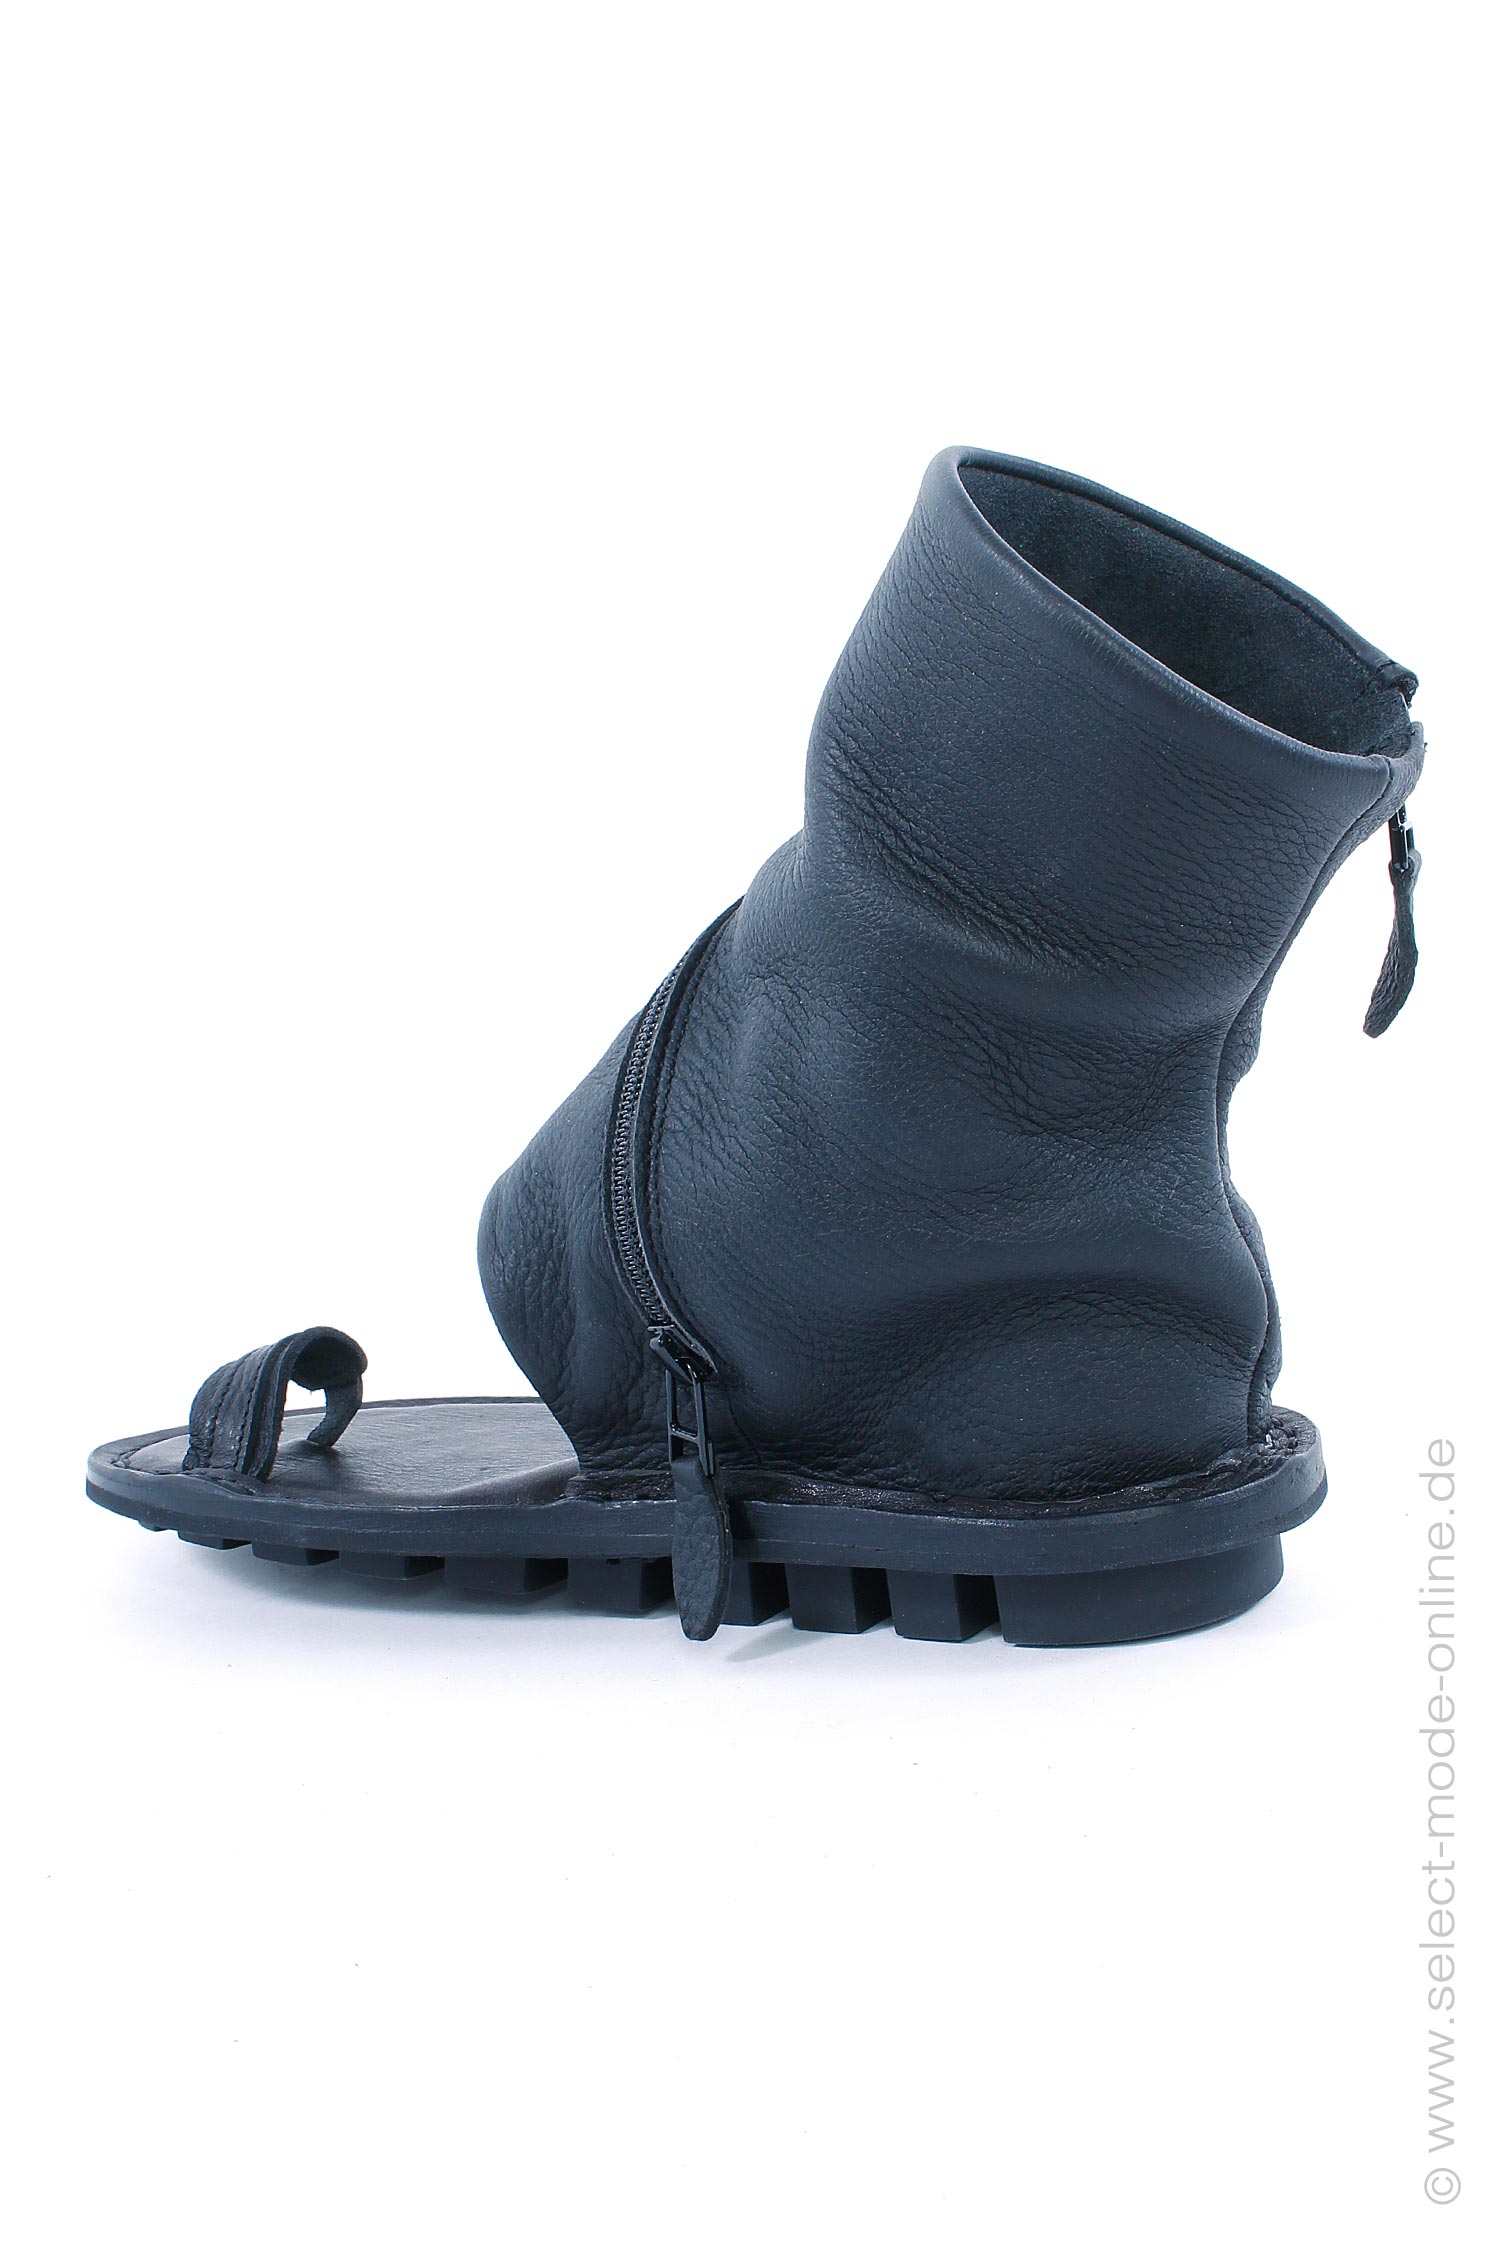 Leather sandals - Black - Elevate